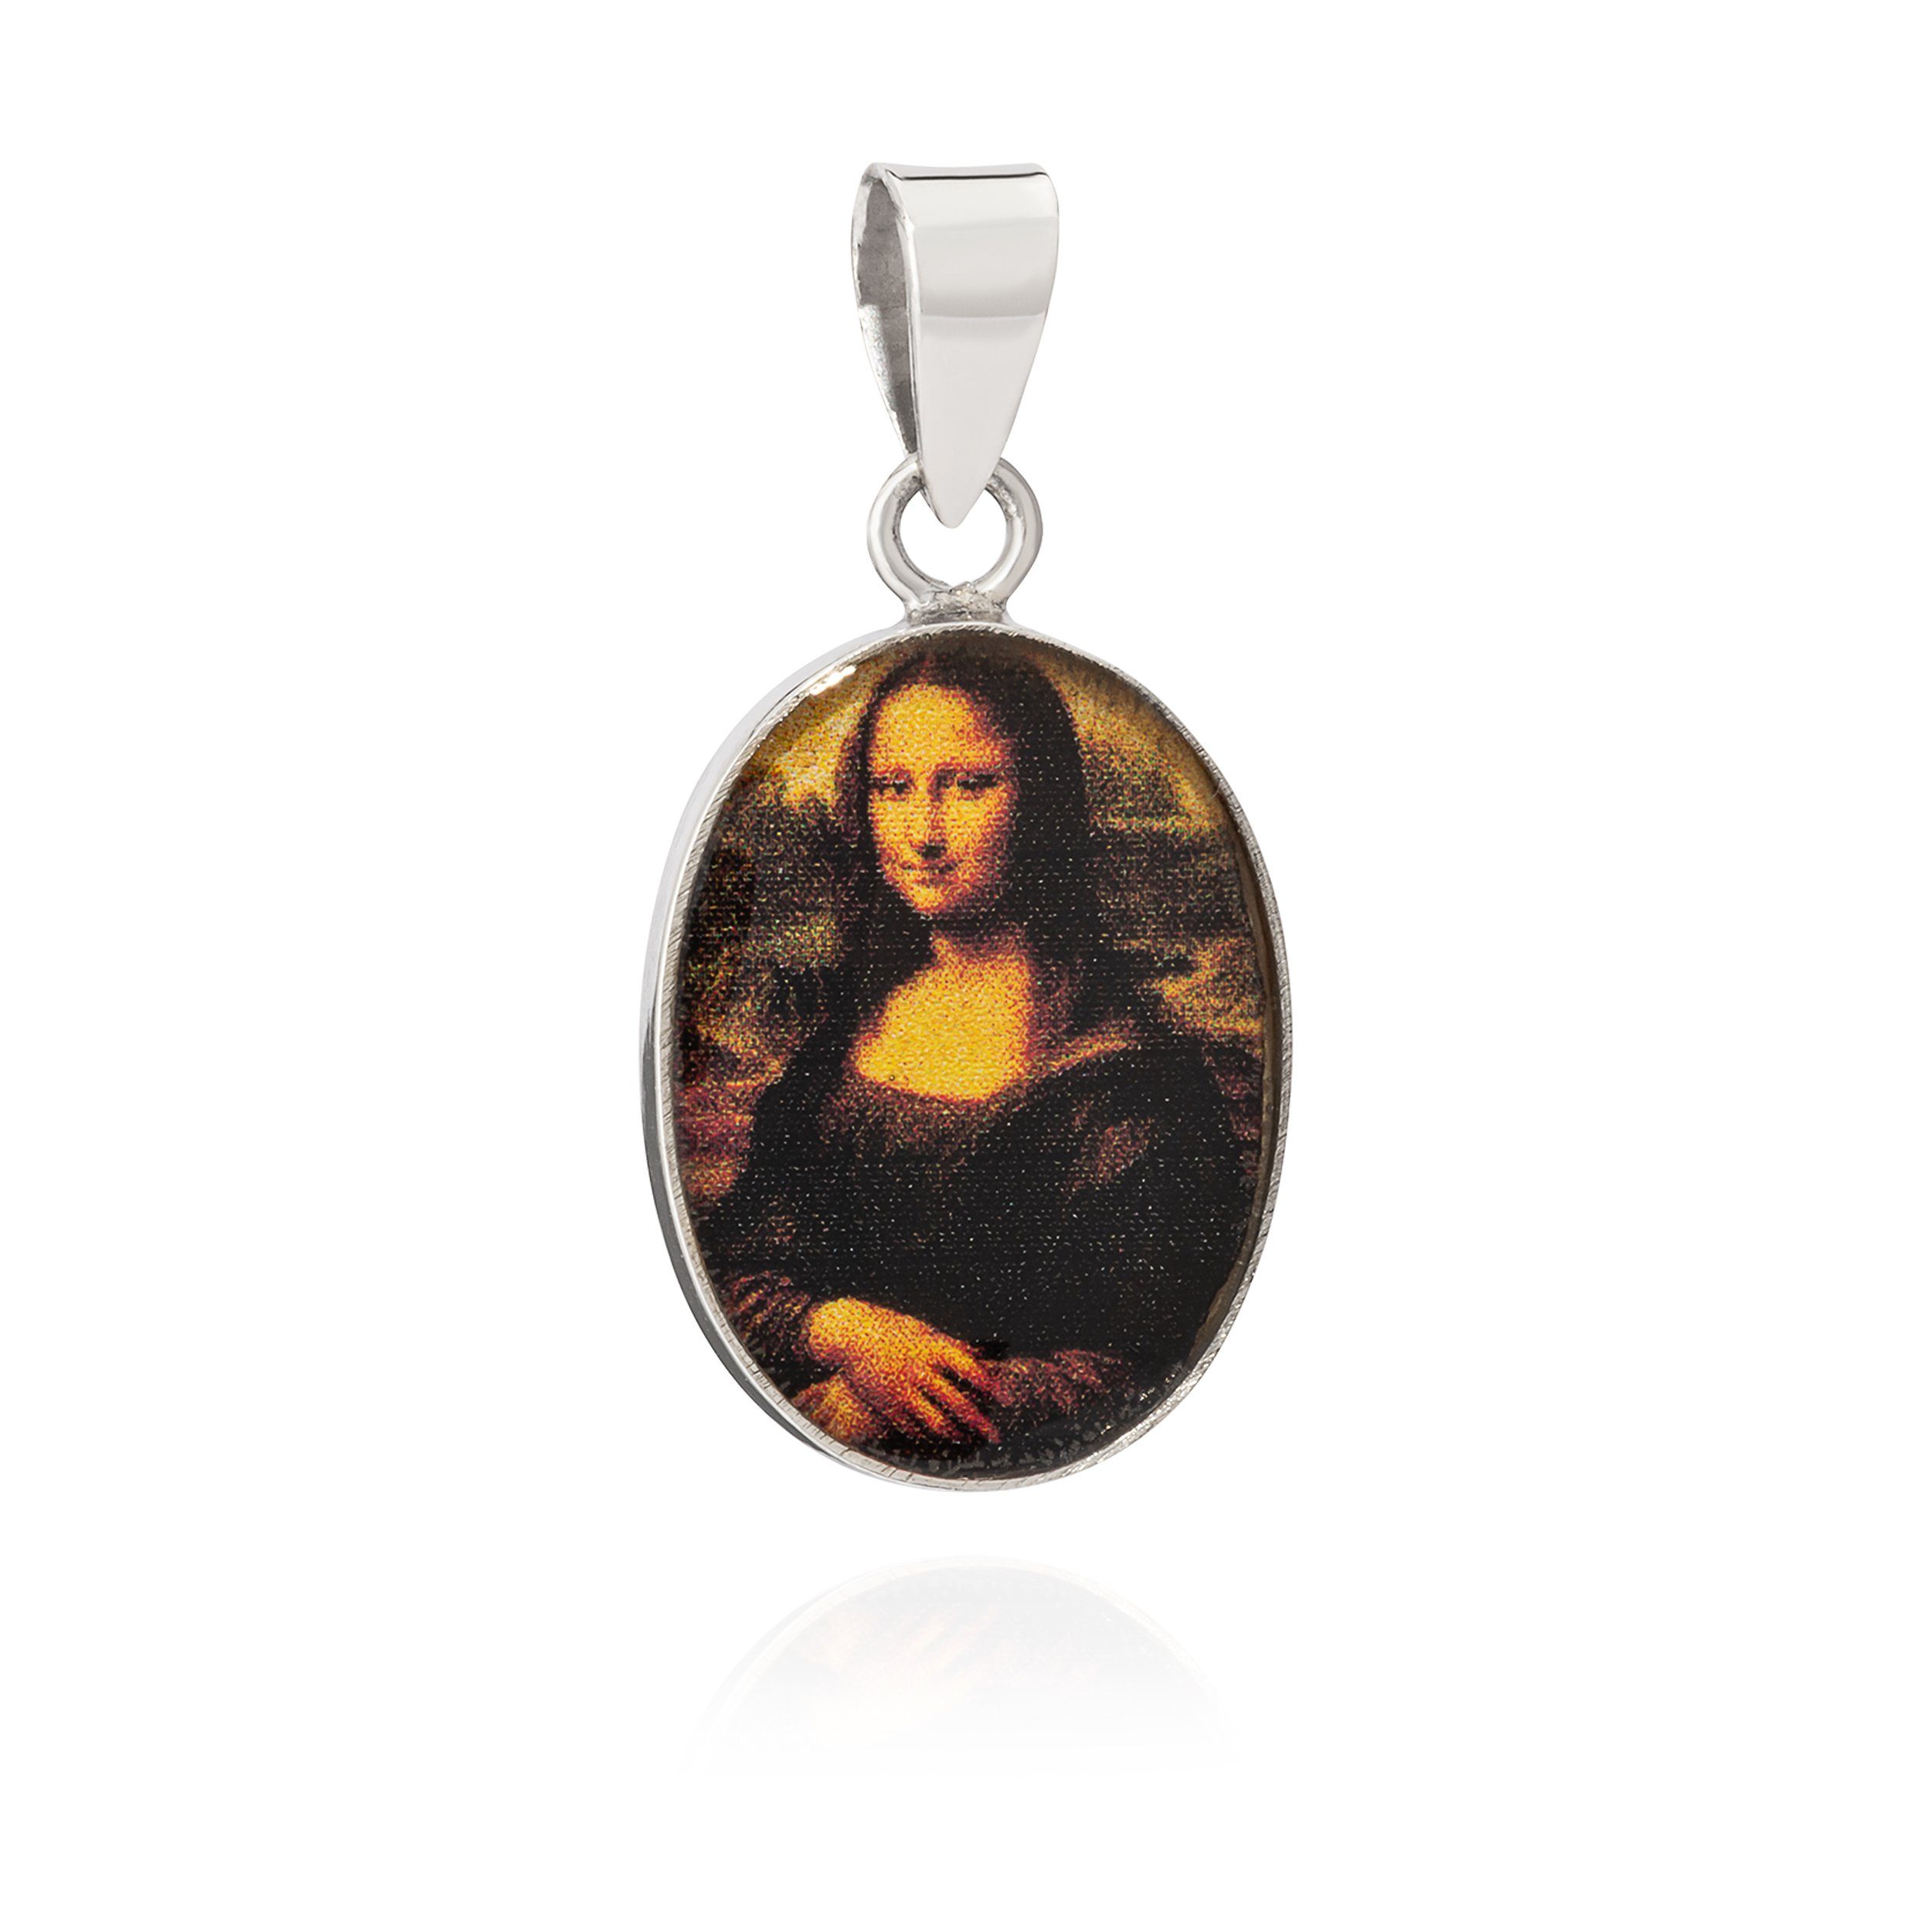 NKlaus Kettenanhänger Kettenanhänger Mona Lisa Silber Silber, 925 rhodiniert 925 Silber 21x14mm